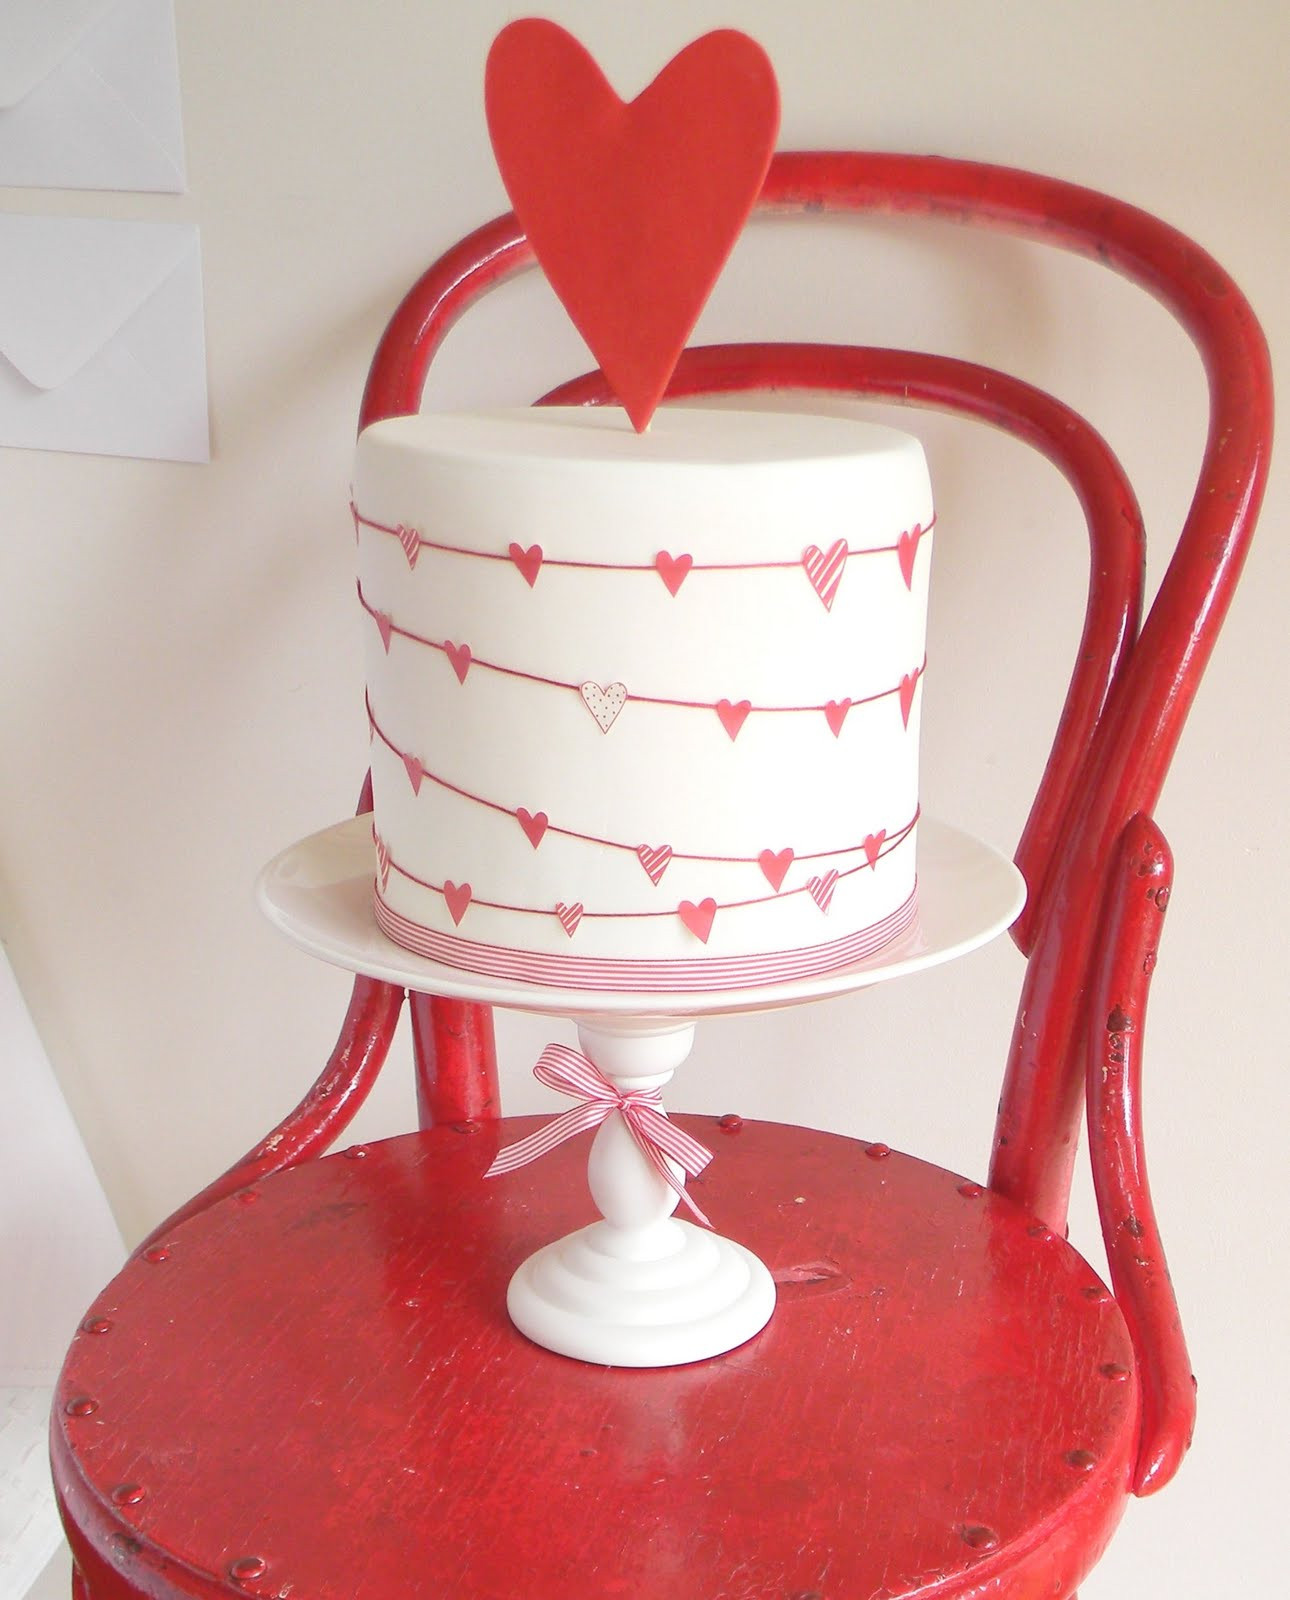 Valentines Day Cake Design
 Top 8 Favorite Valentine s Day Cake Projects Jessica